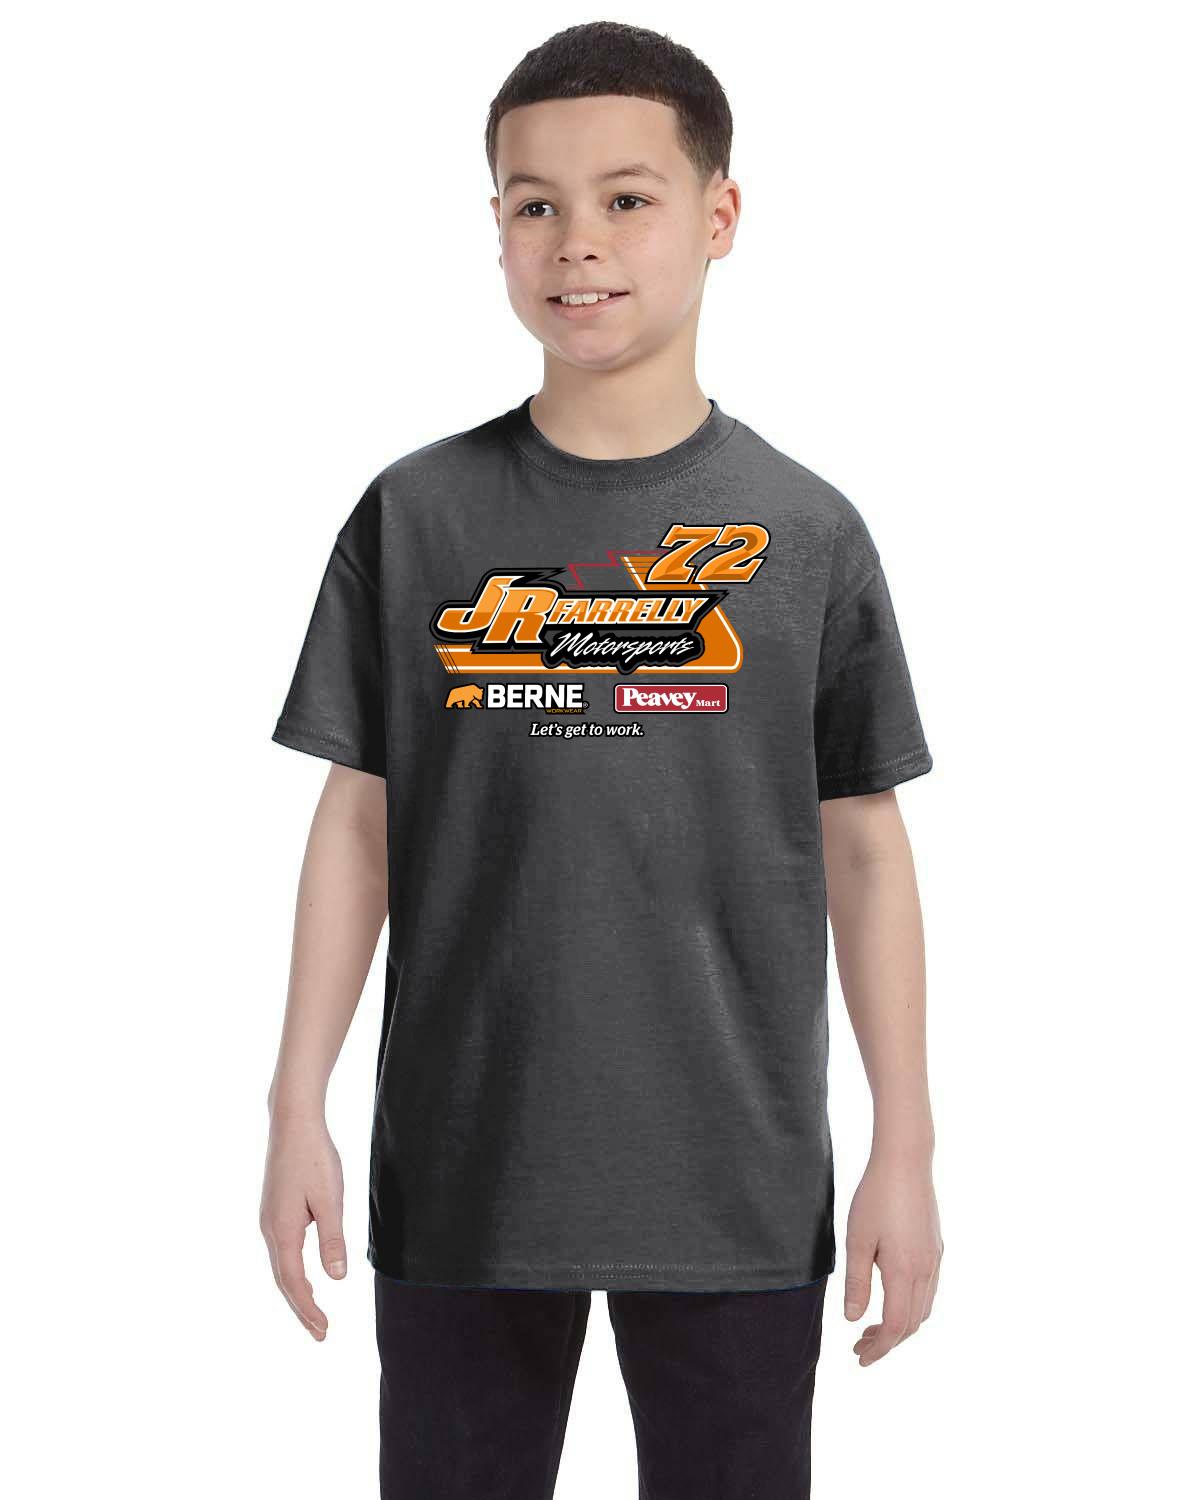 Jr. Farrelly Motorsports / BERNE-Peavey Racing Youth T-shirt